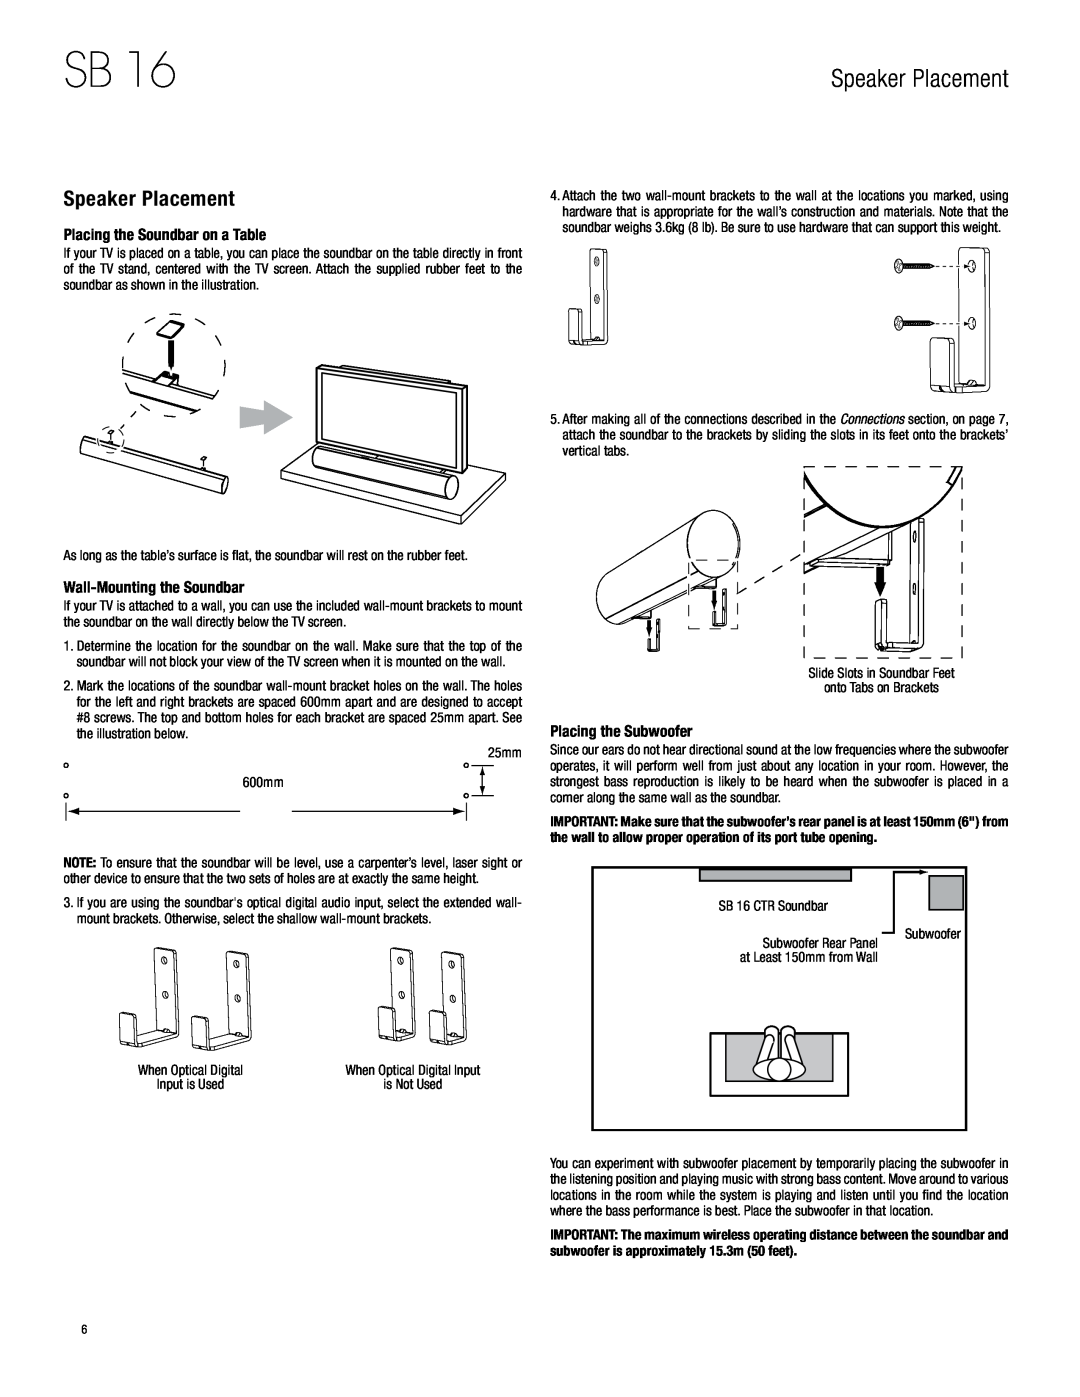 Harman-Kardon SB 16 Speaker Placement, Placing the Soundbar on a Table, Wall-Mounting the Soundbar, Placing the Subwoofer 